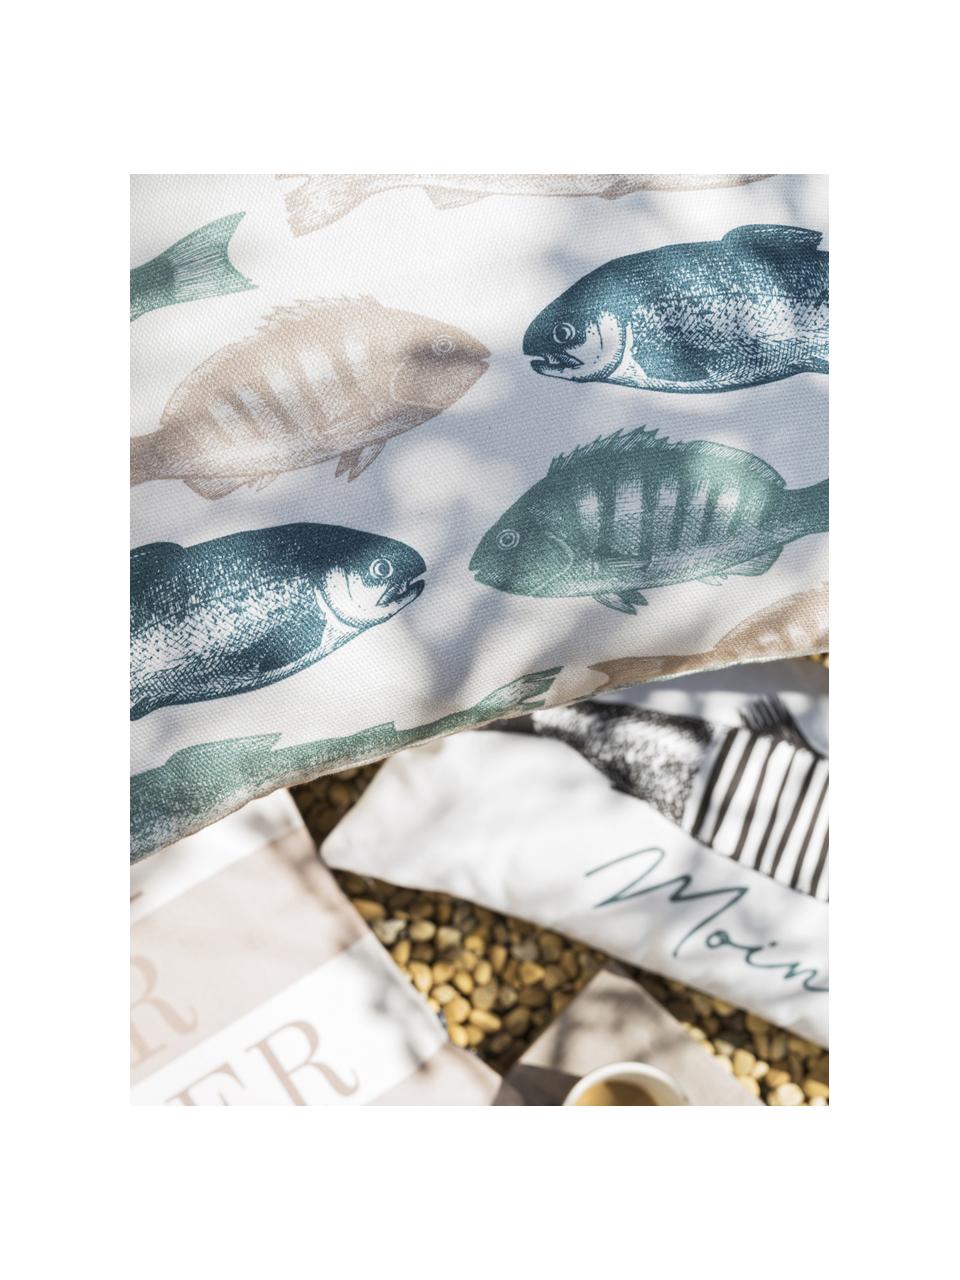 Baumwoll-Kissenhülle Maritim mit Fisch-Motiv, 100% Baumwolle, Beige, Blau, Mintgrün, B 40 x L 40 cm